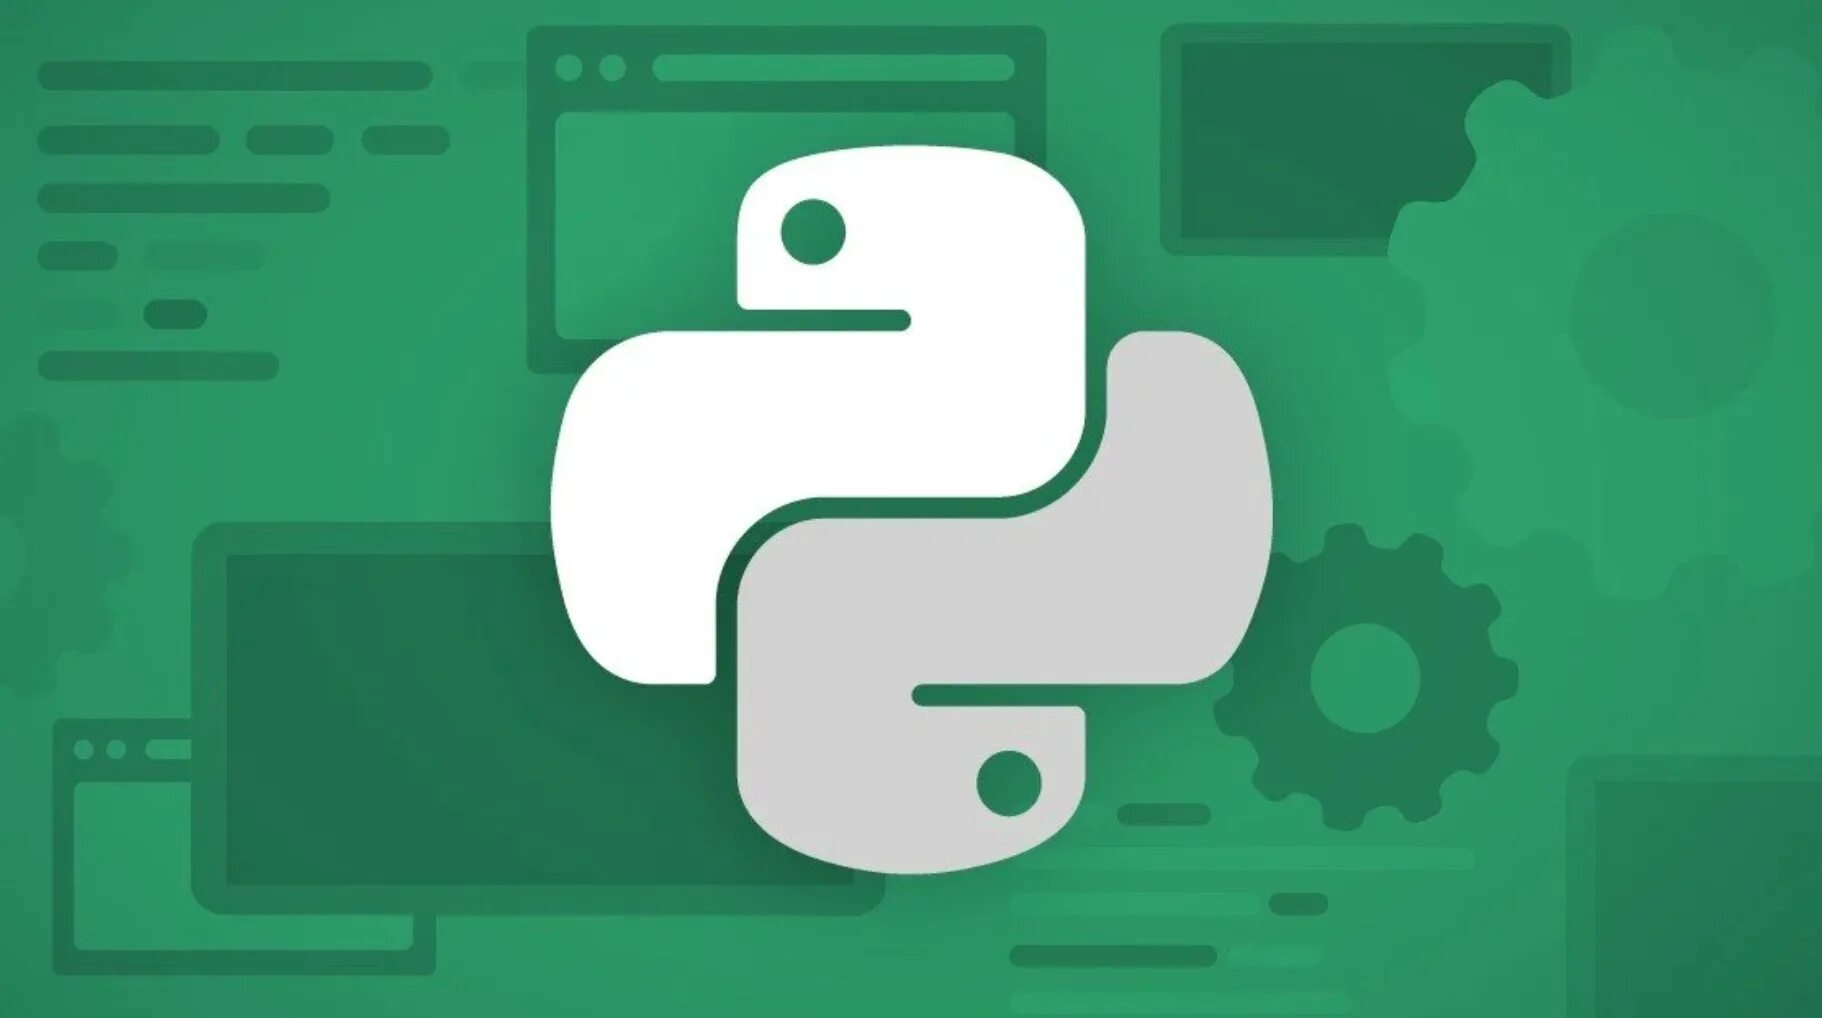 Hat python. Python картинки. Питон язык программирования логотип. Фон для презентации Python. Фото Python программирование.